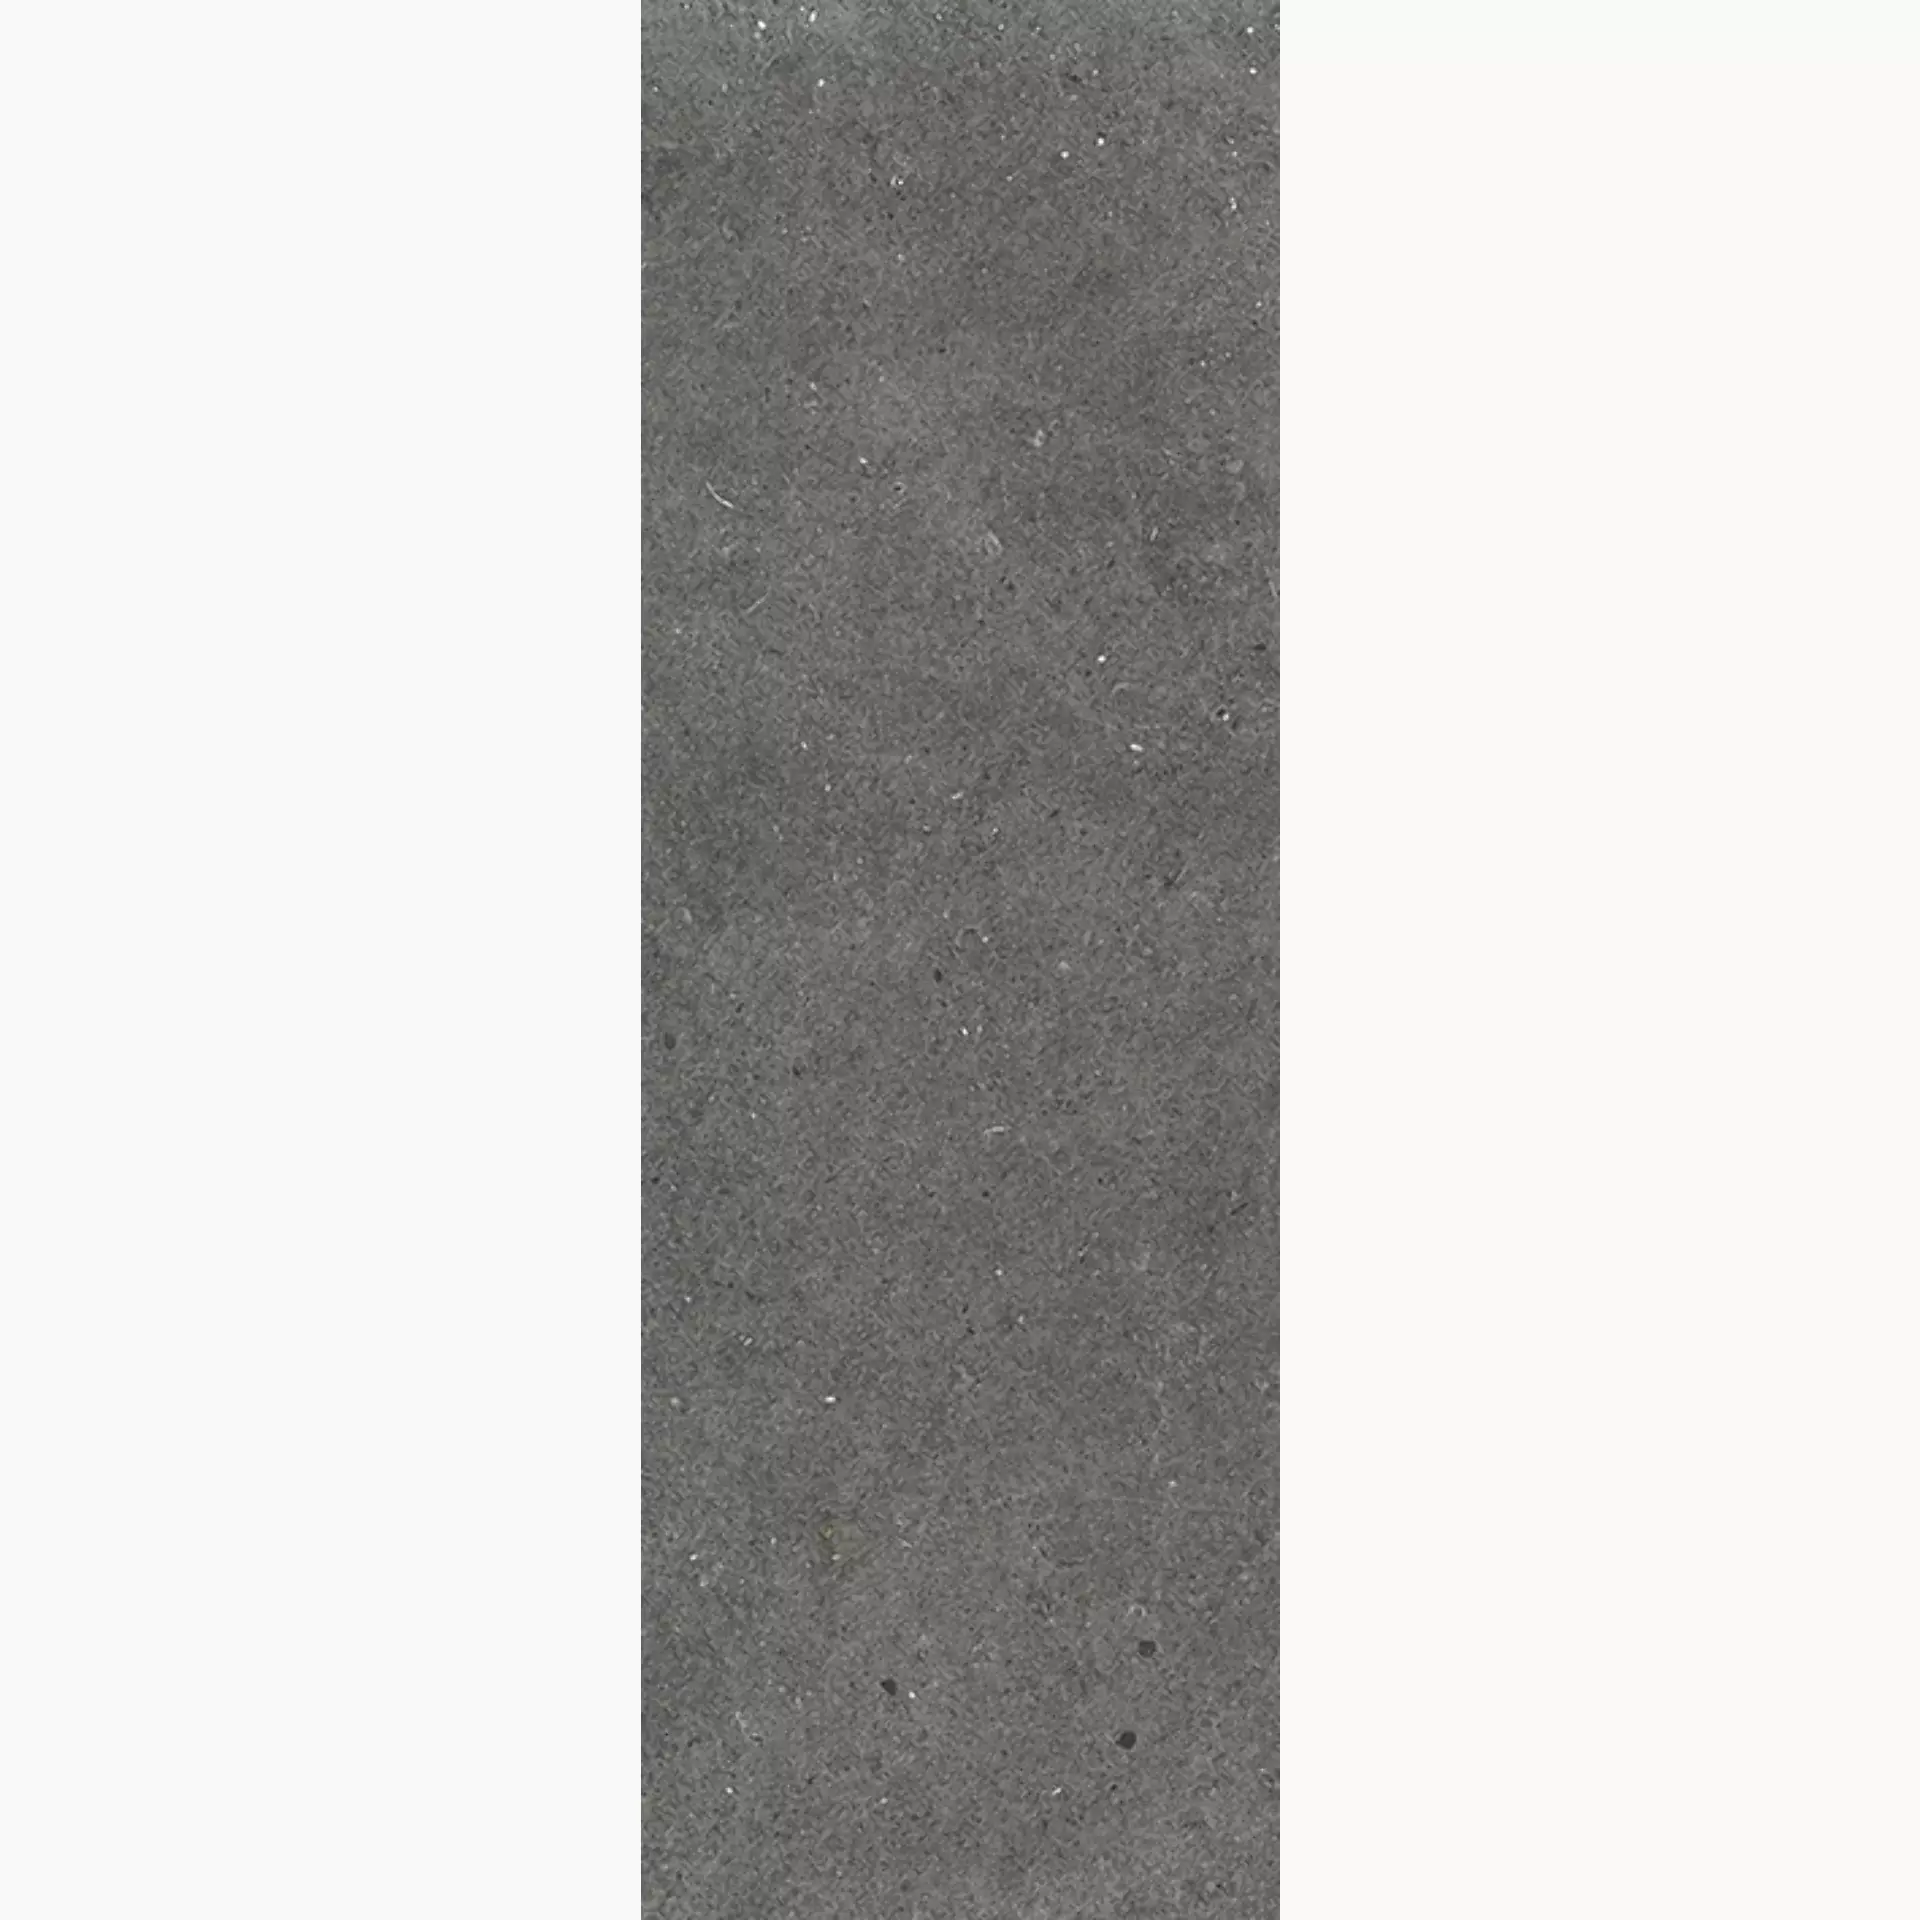 Villeroy & Boch Solid Tones Dark Concrete Matt 2621-PC62 20x60cm rectified 10mm